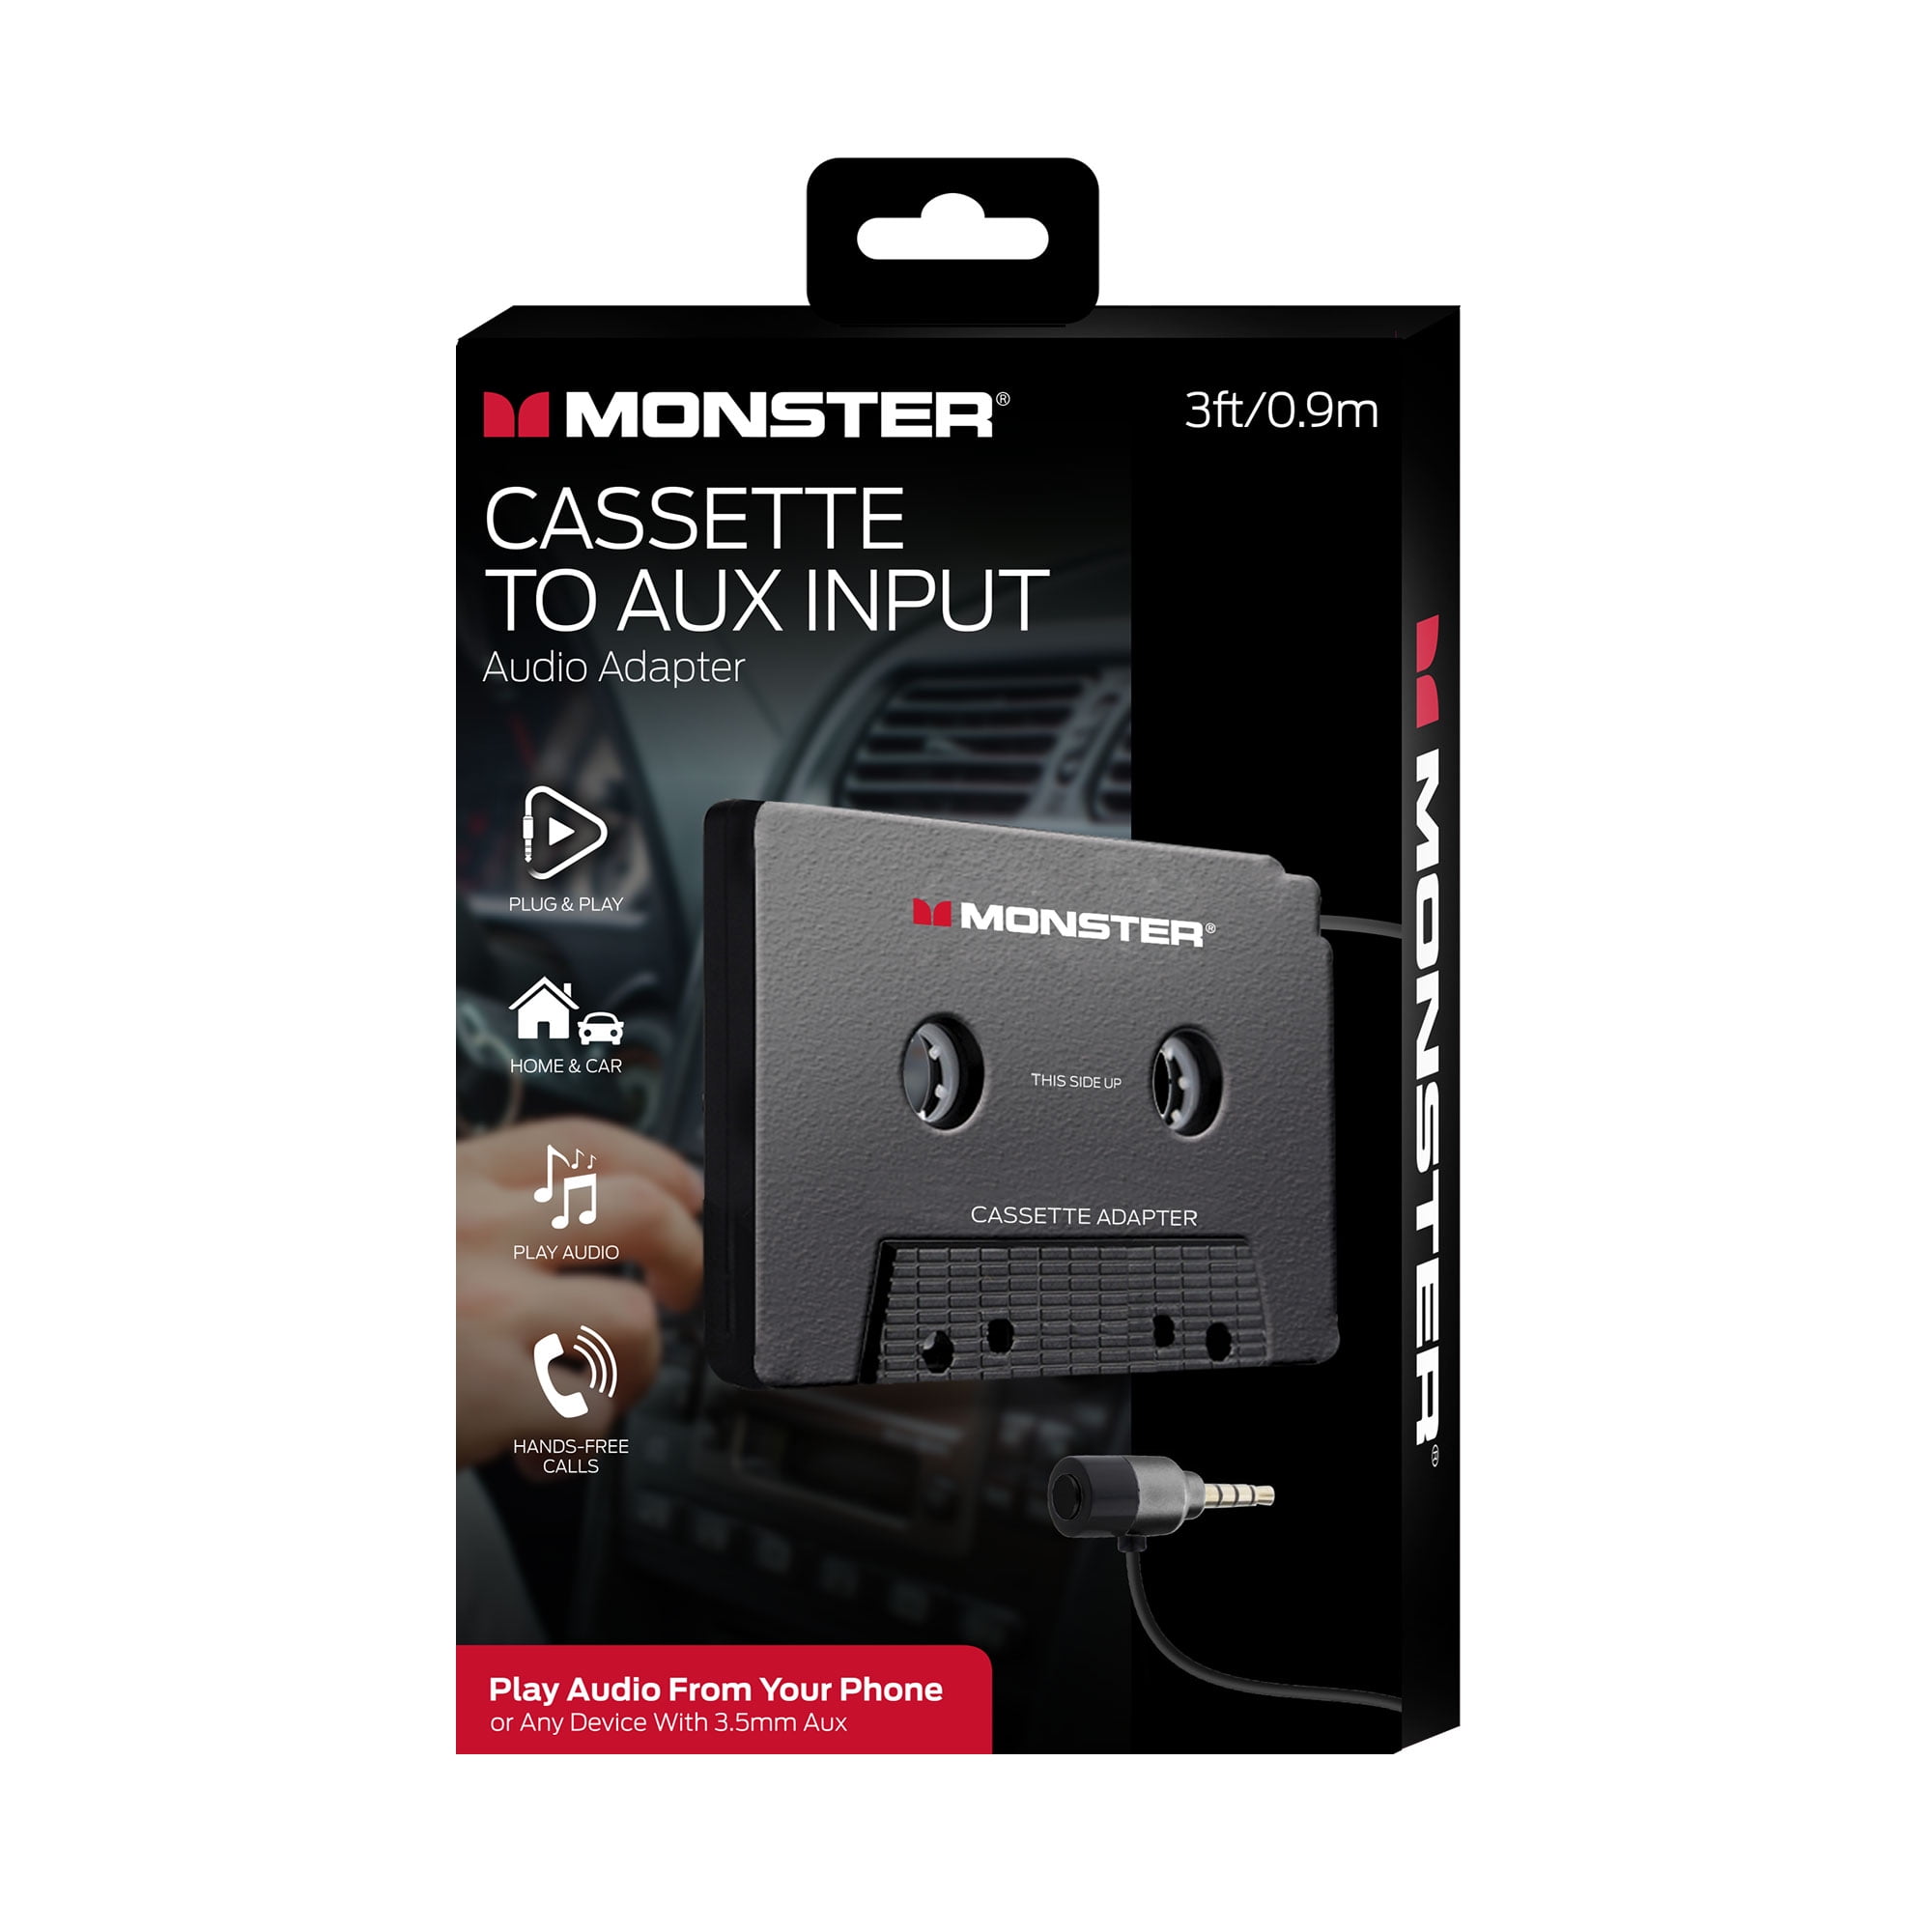 Monster Cassette Adapter Opened packaging Damaged Packaging Tape New